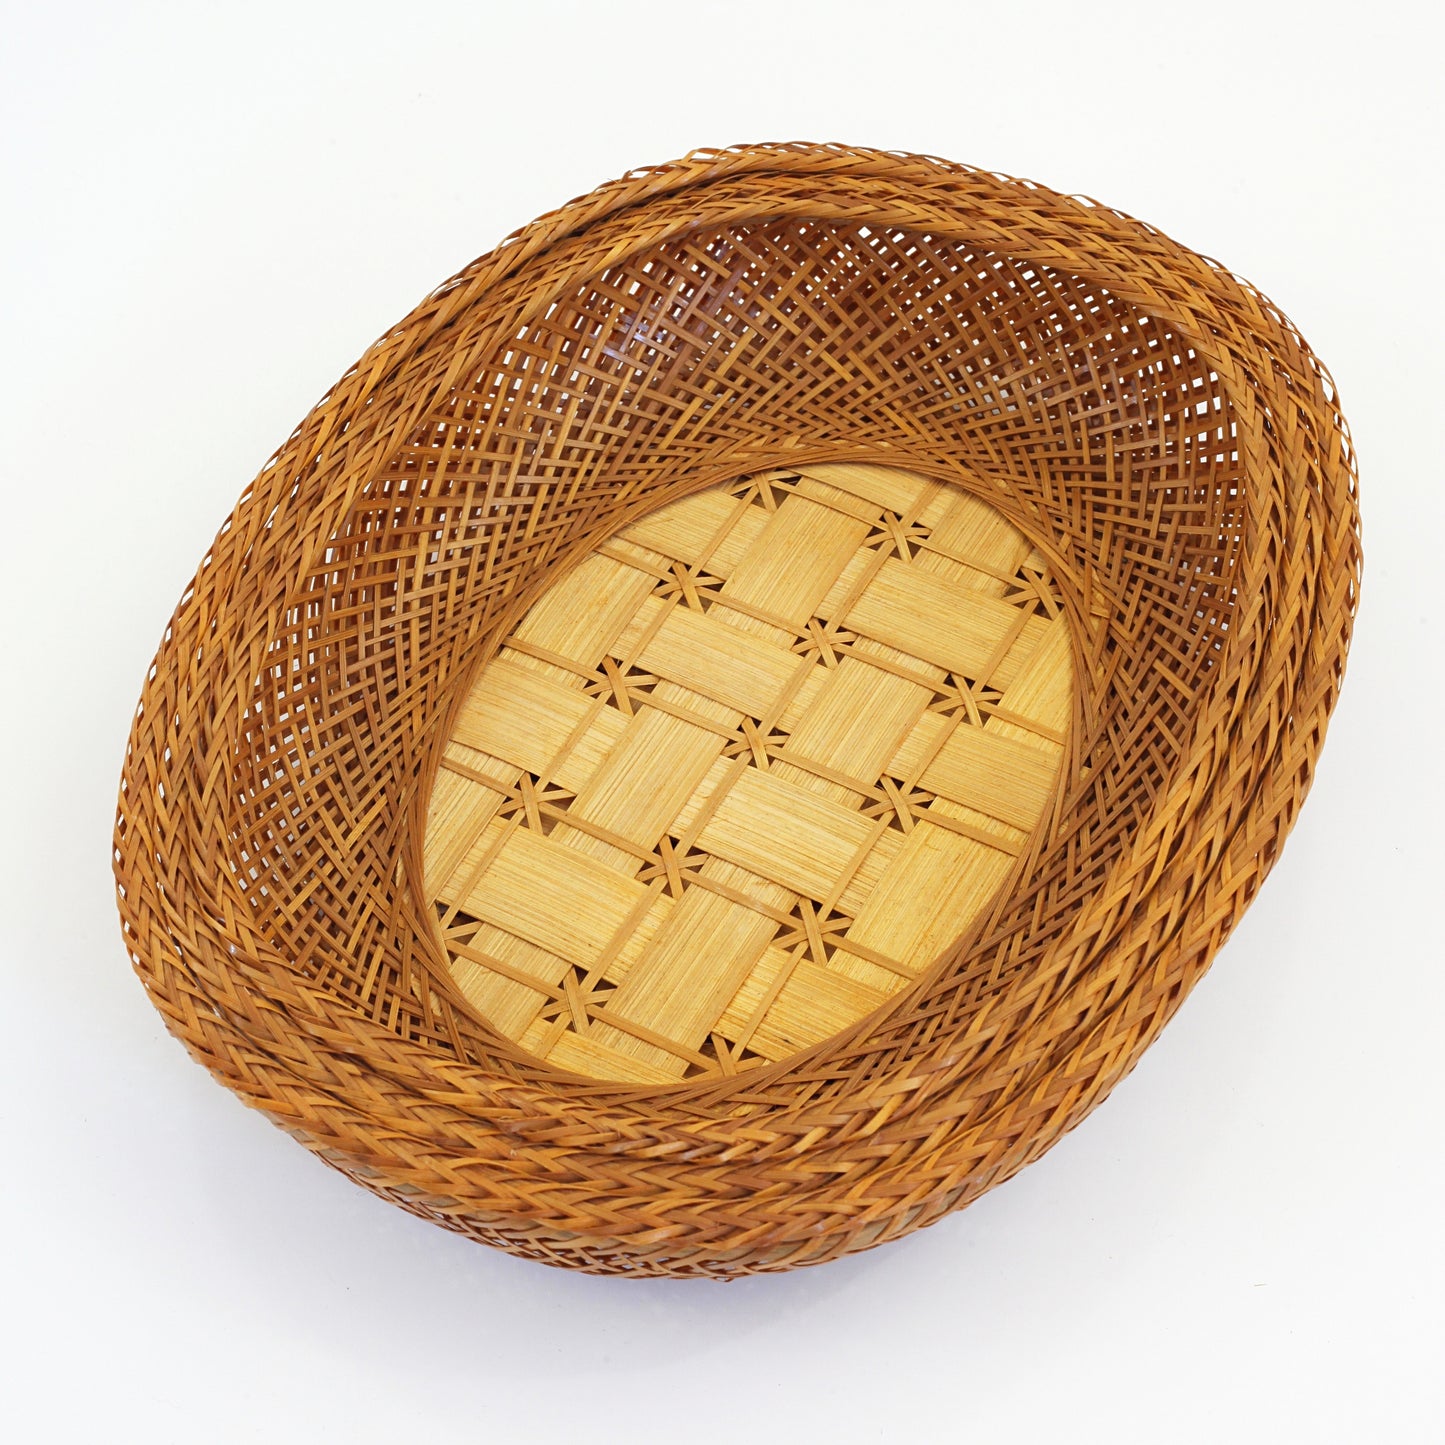 SOLD - Set of Three Vintage Wicker Nesting Baskets